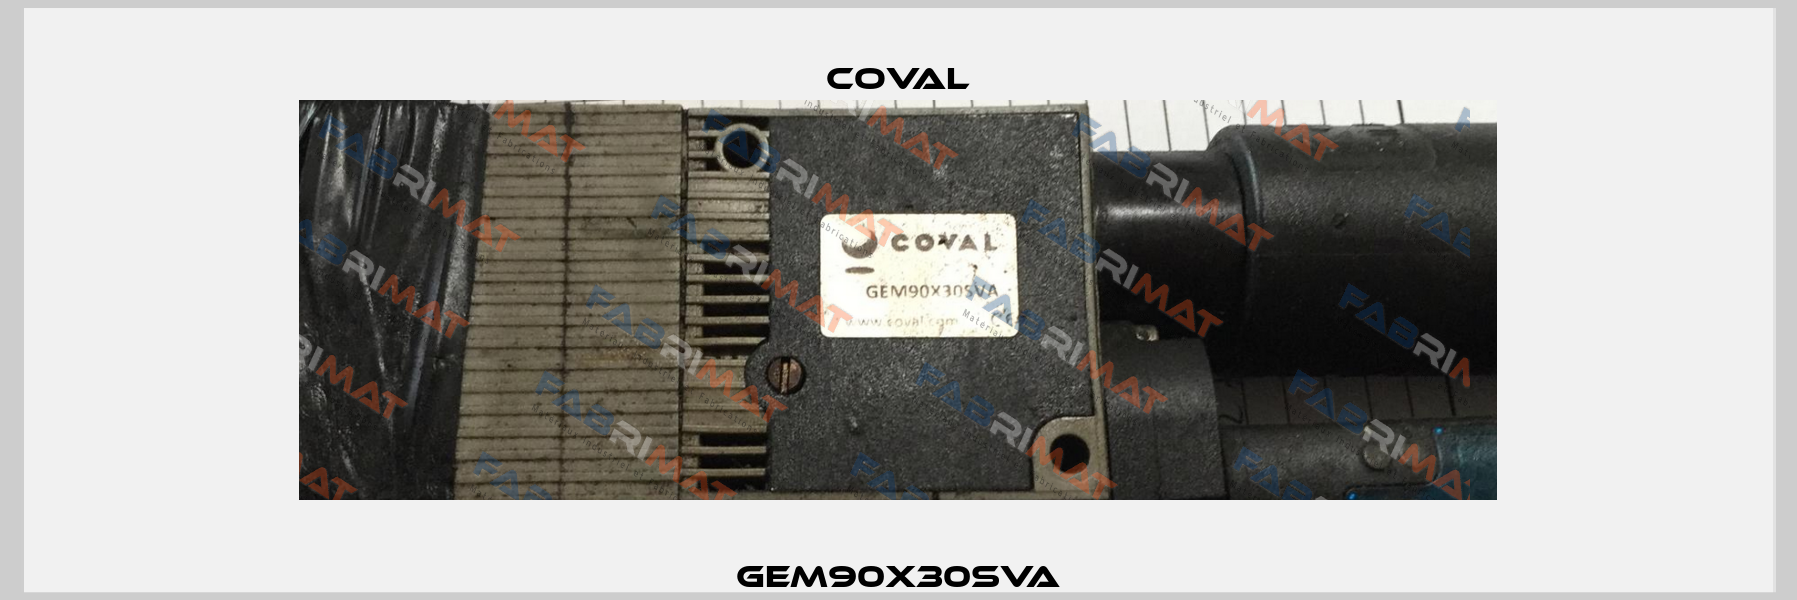 GEM90X30SVA Coval